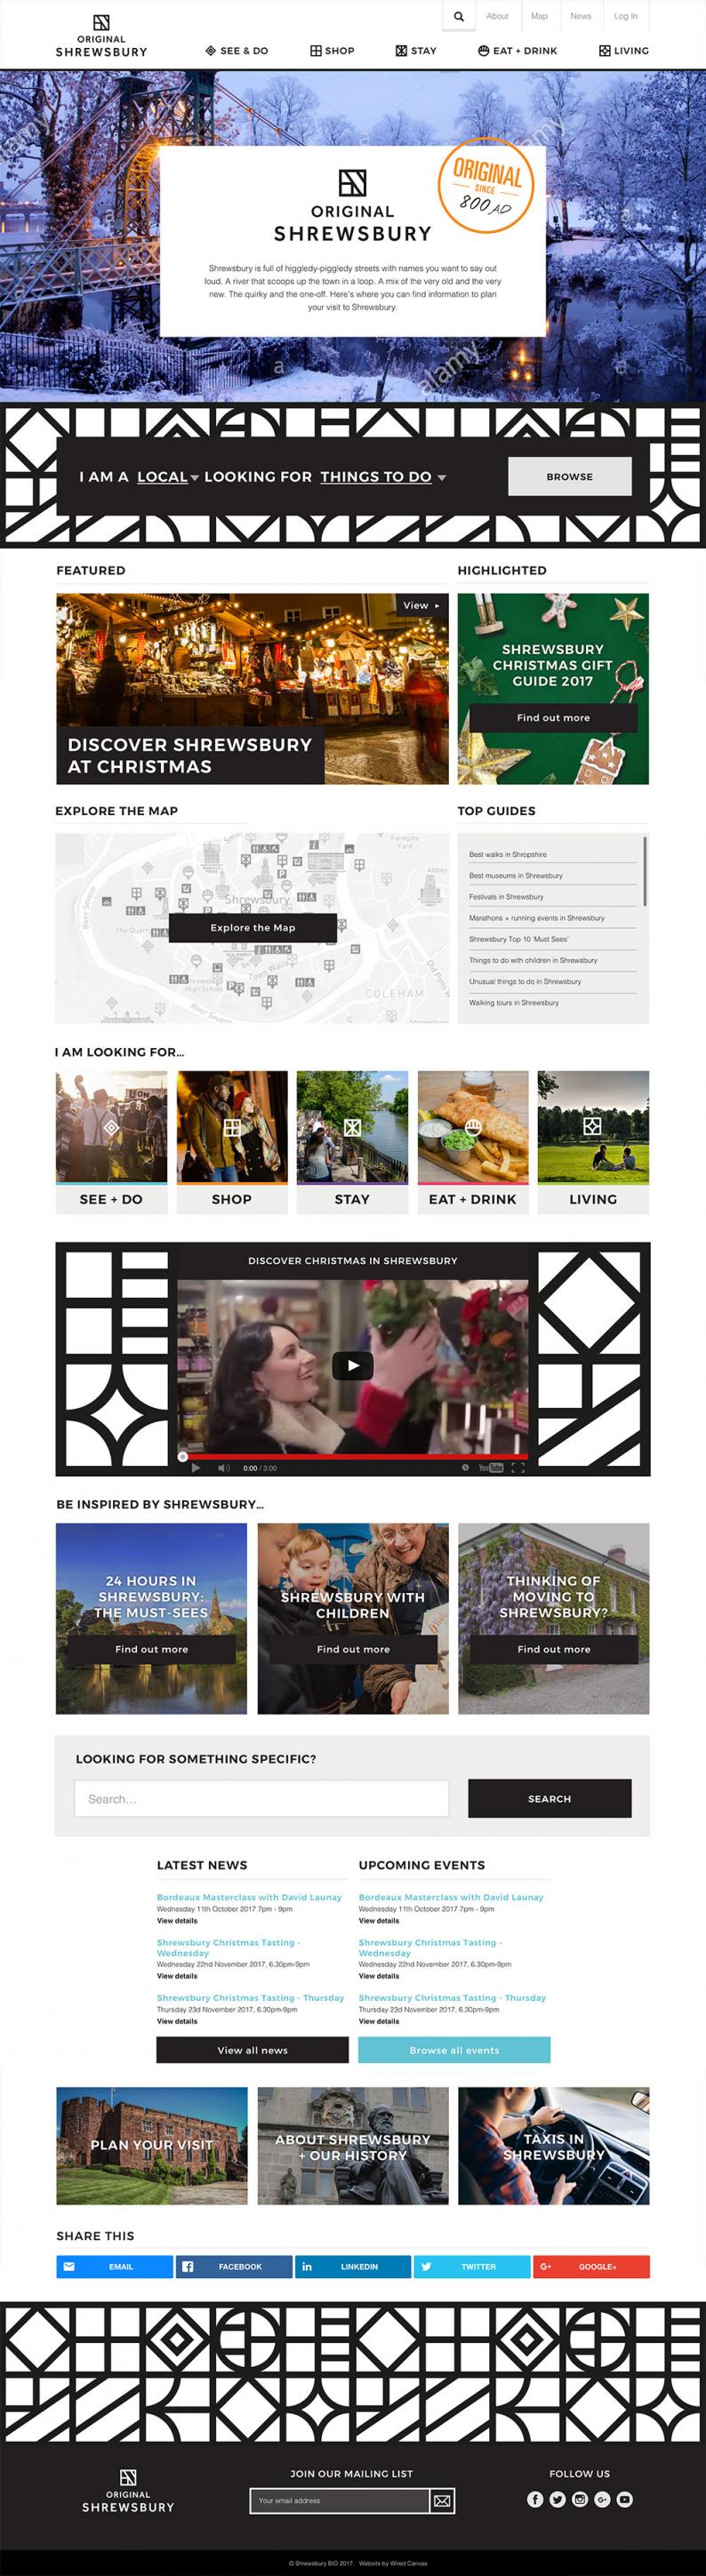 Original Shrewsbury Website Homepage - Desktop view